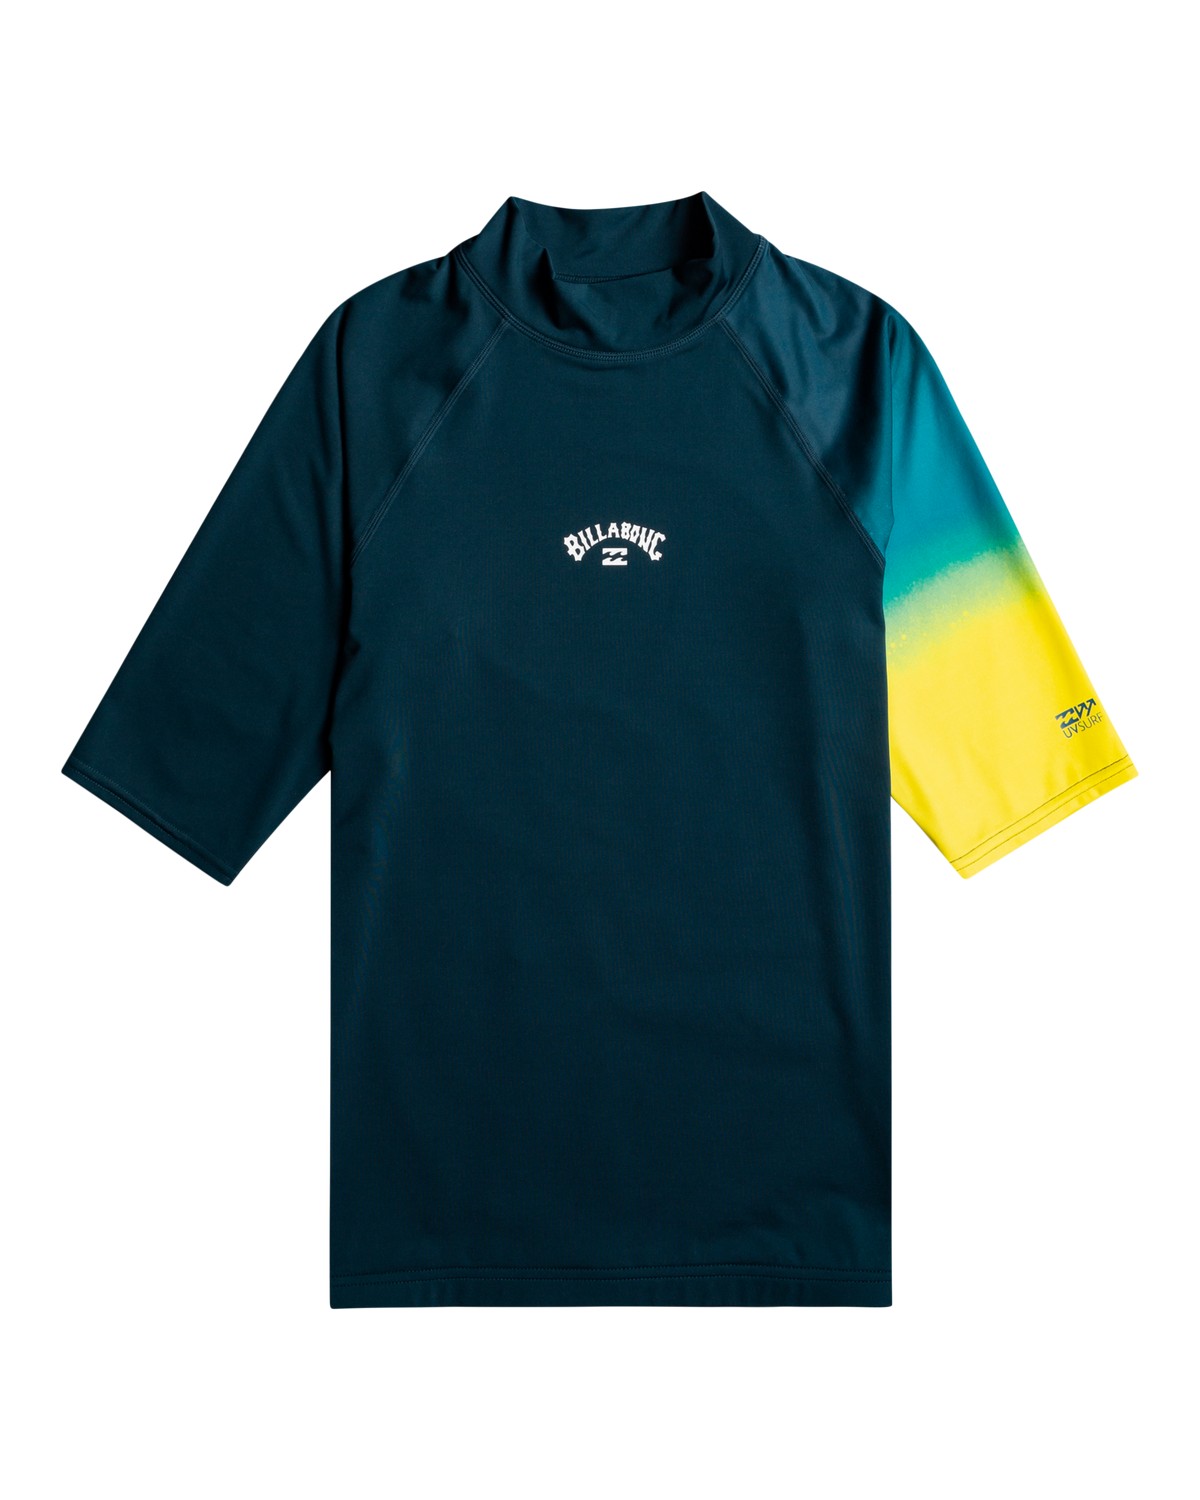 Billabong - UV Rashguard for men - Short sleeve - Contrast printed - Neon Yellow